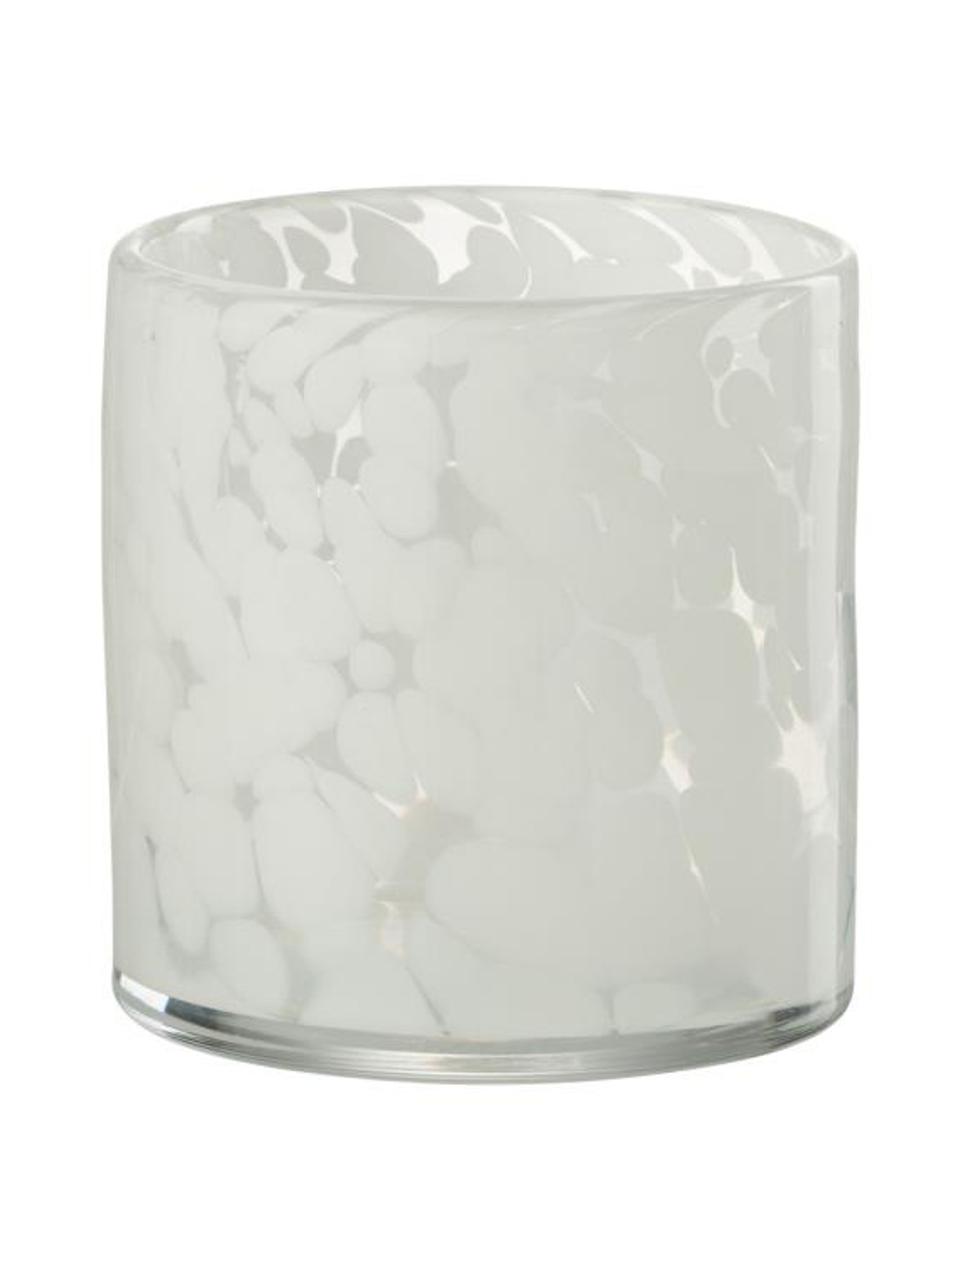 Waxinelichthouder Hurricane in wit met stippen, Glas, Wit, transparant, Ø 12 x H 12 cm